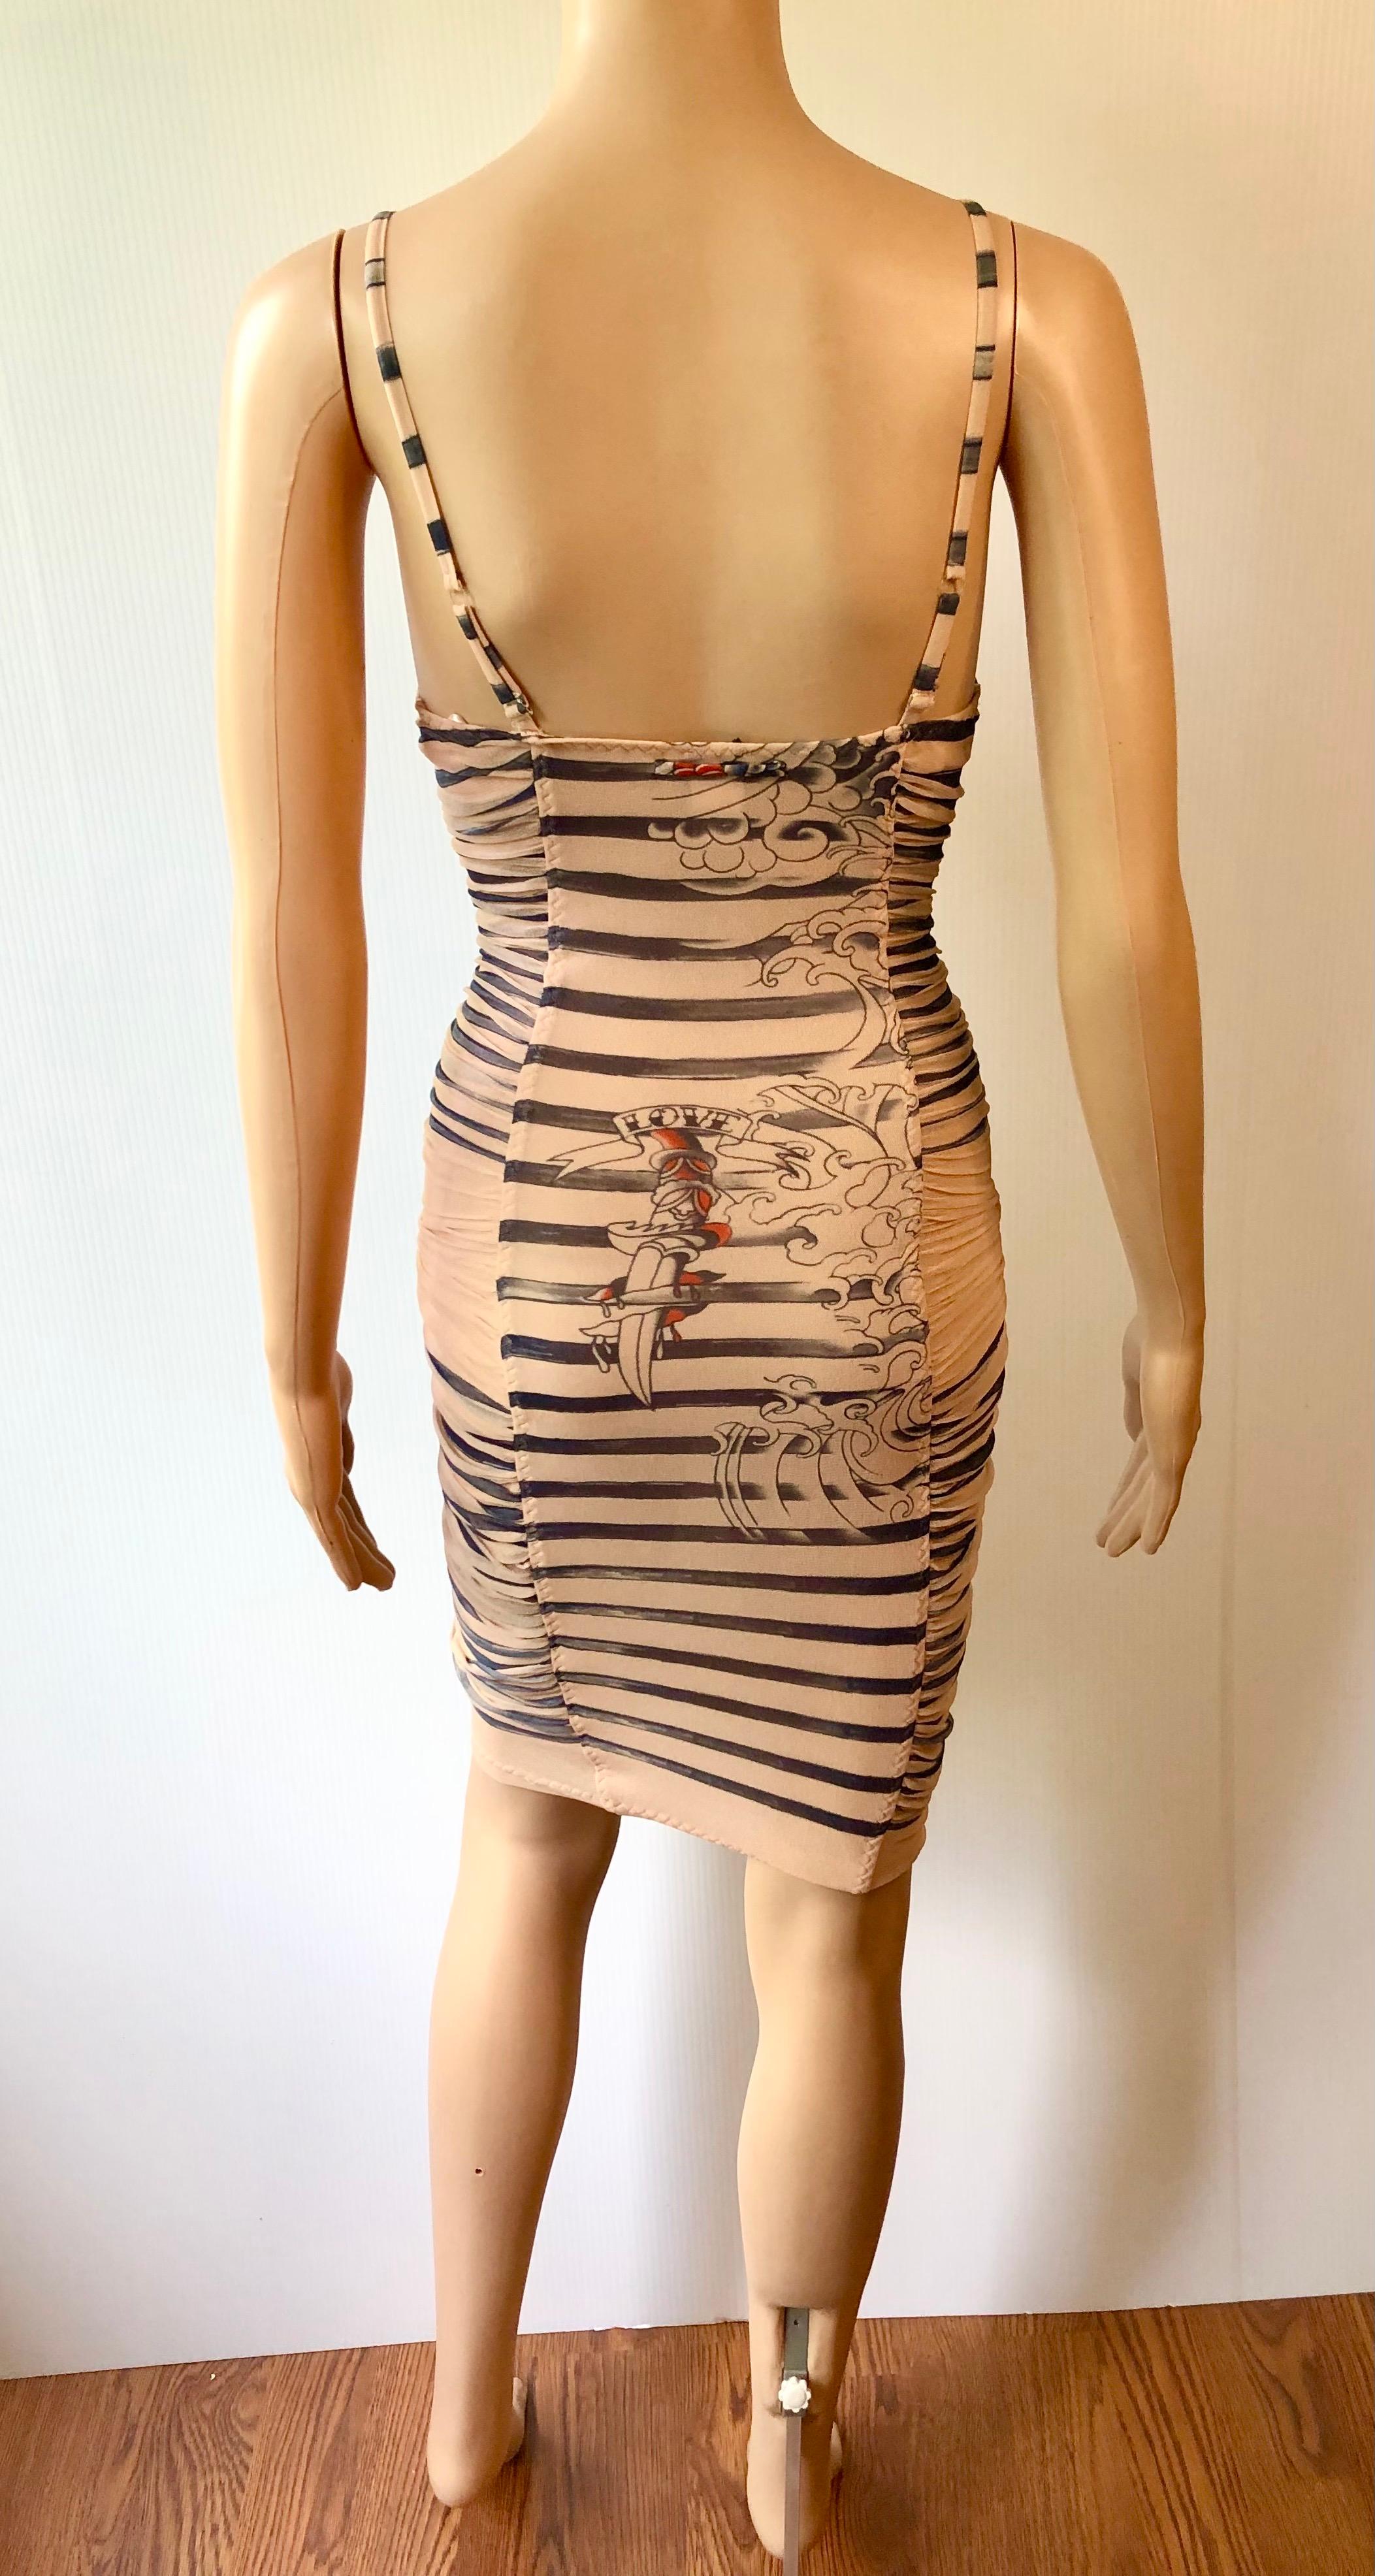 Women's or Men's Jean Paul Gaultier Soleil S/S 2012 Tattoo Print Semi-Sheer Mesh Bodycon Dress